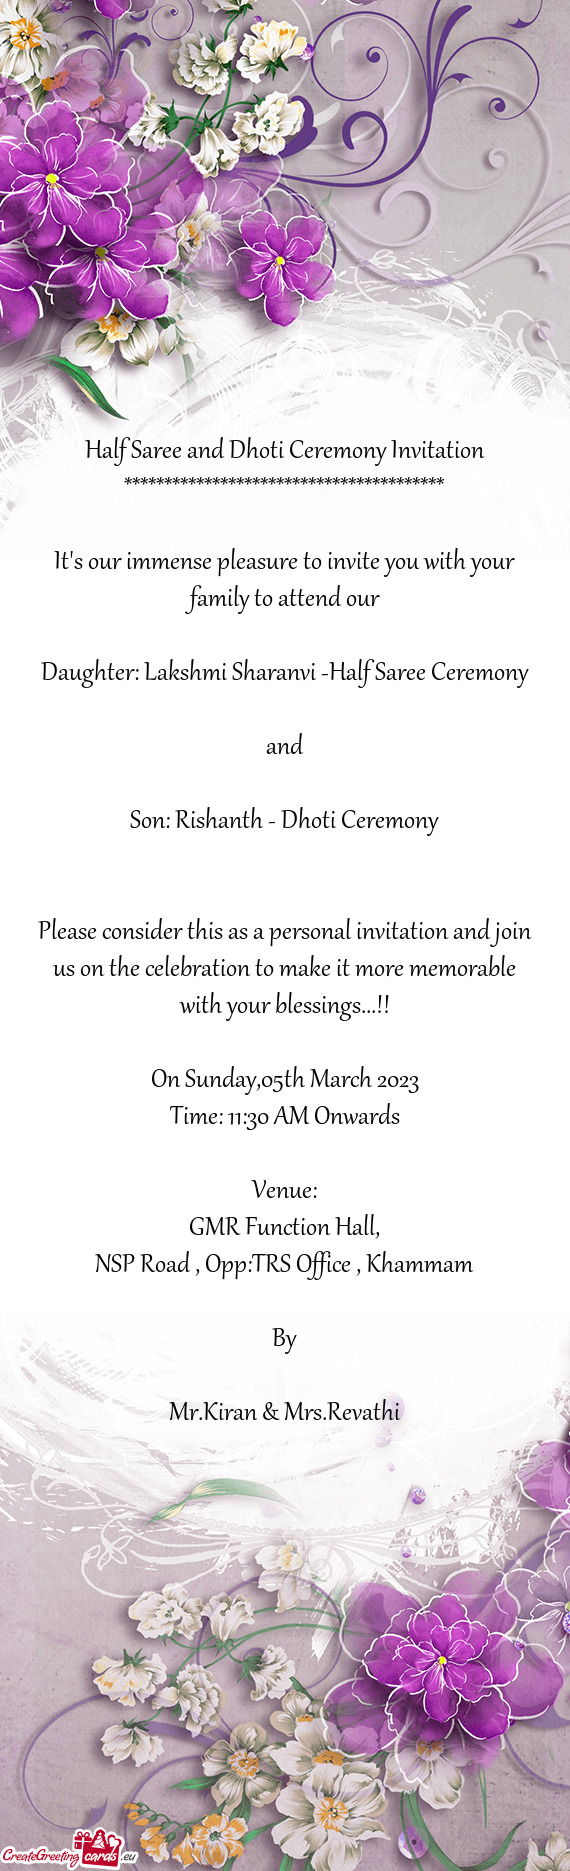 Son: Rishanth - Dhoti Ceremony